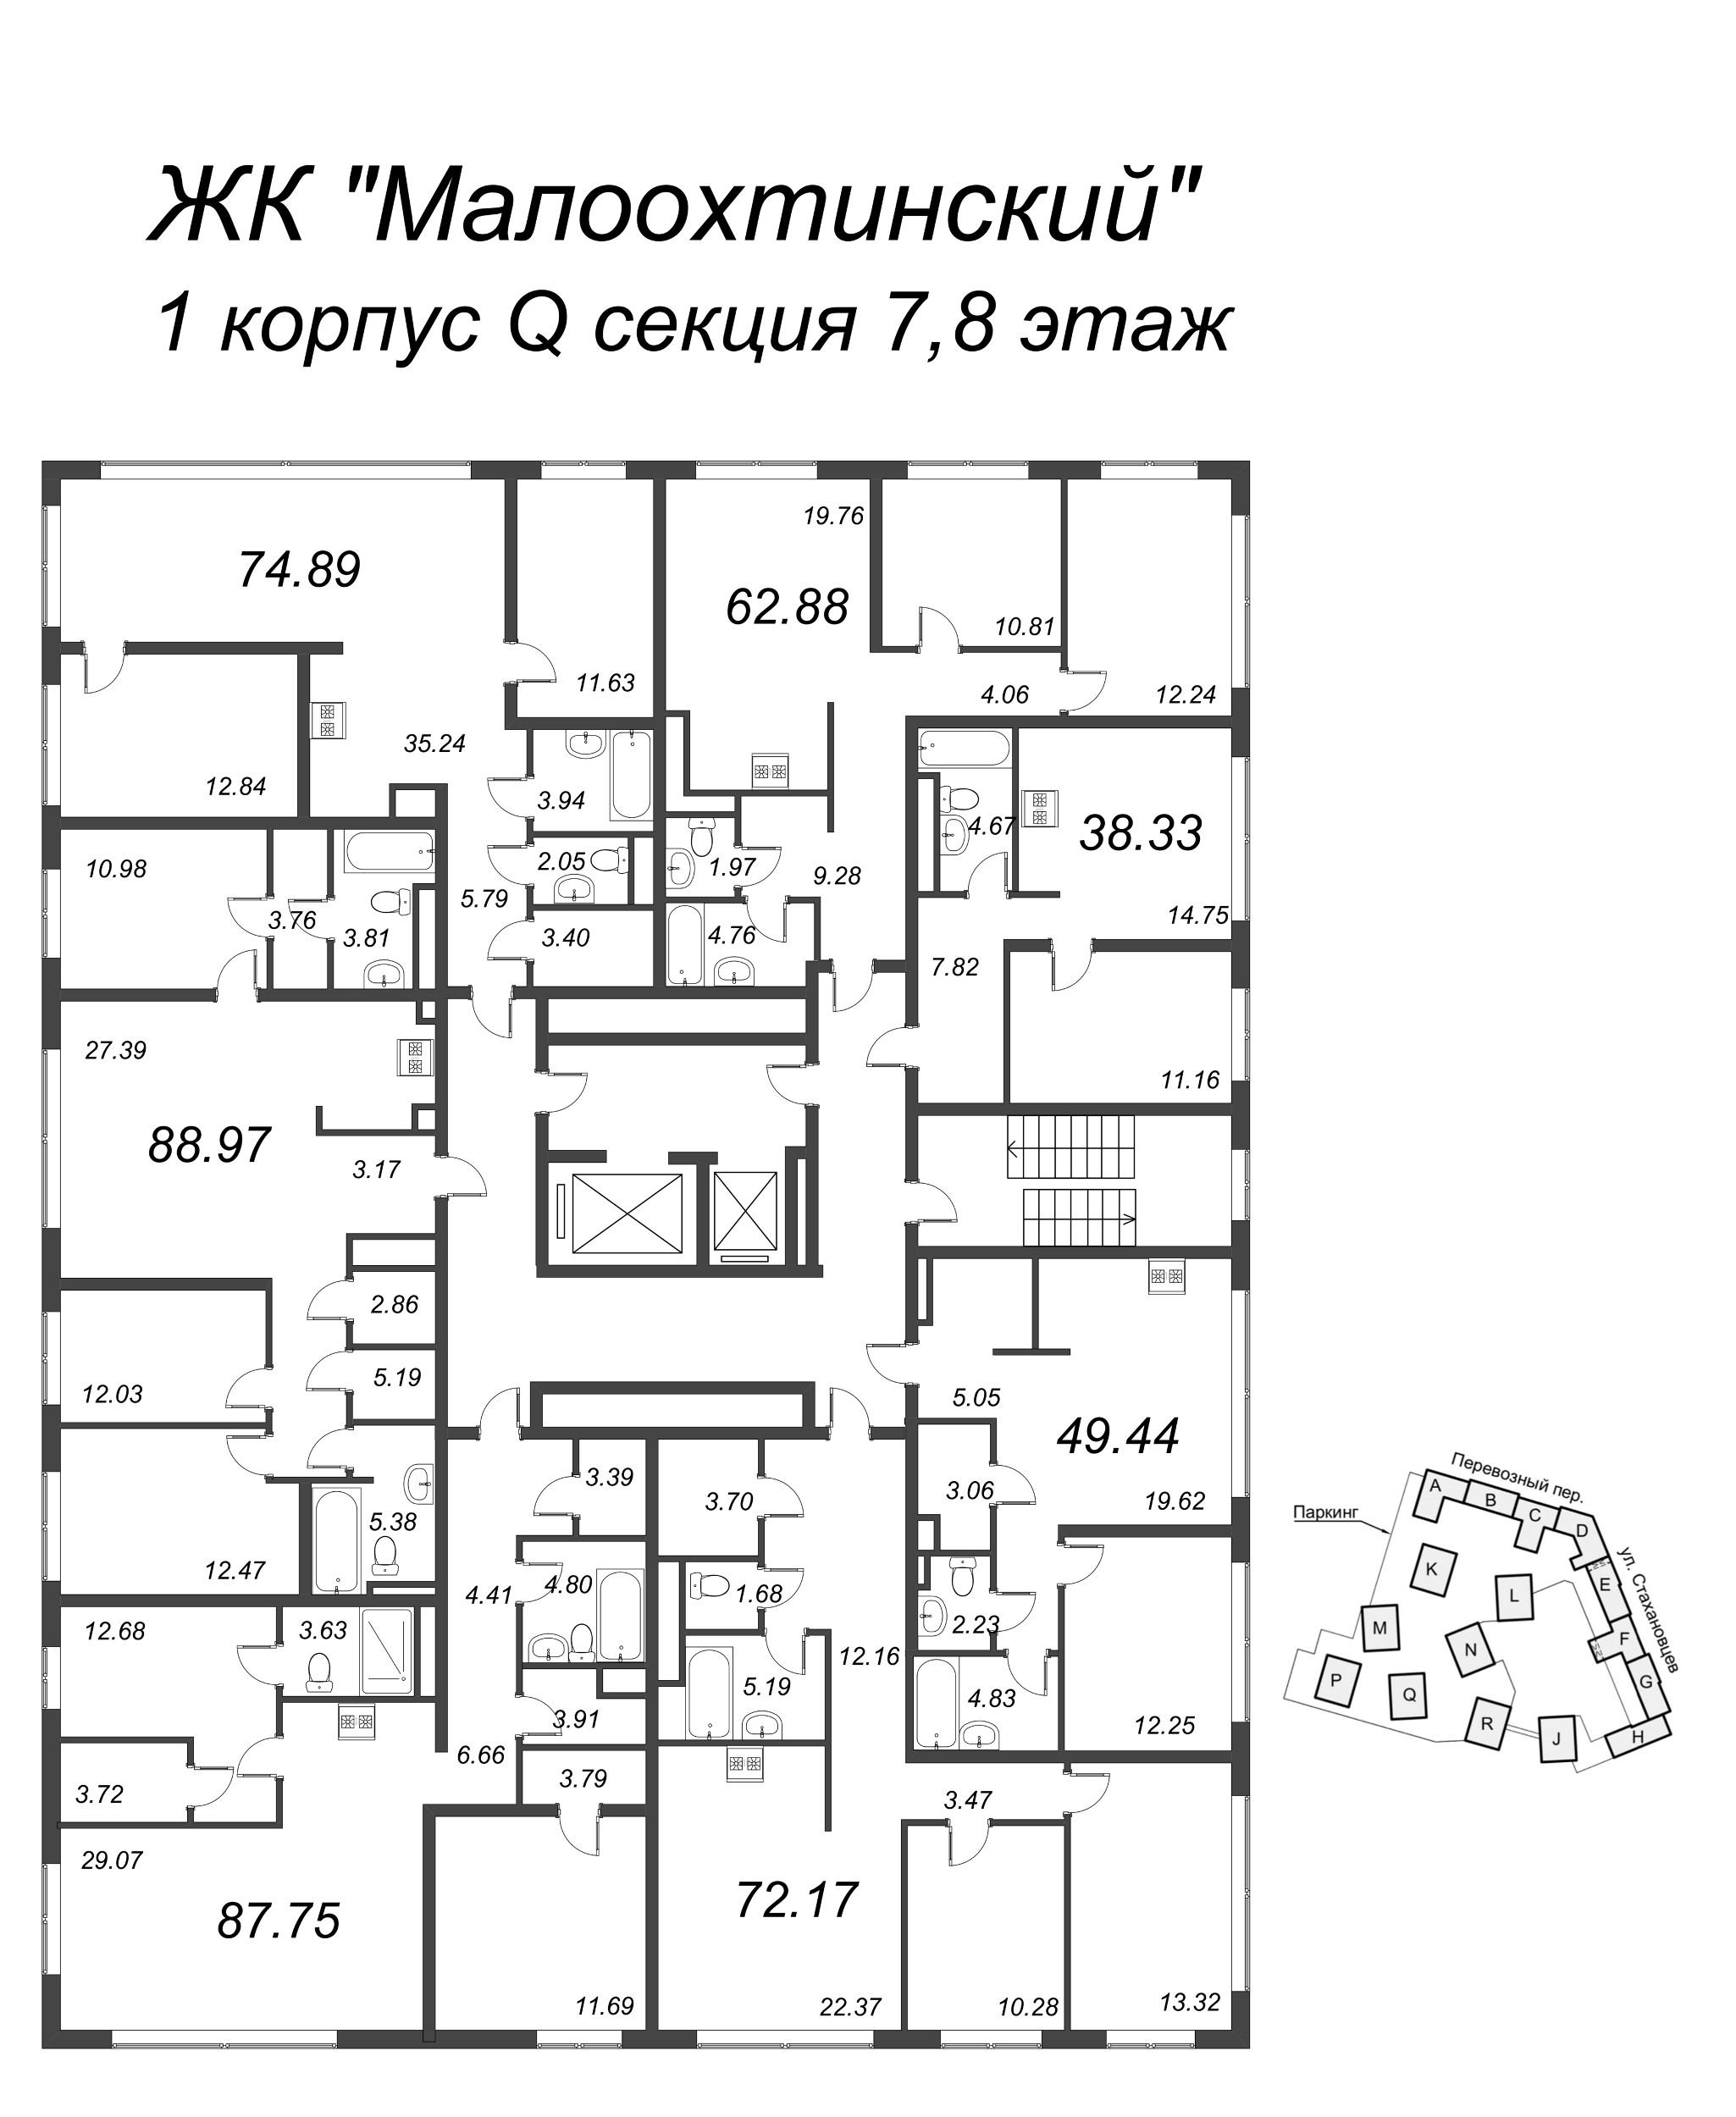 3-комнатная (Евро) квартира, 78.6 м² - планировка этажа